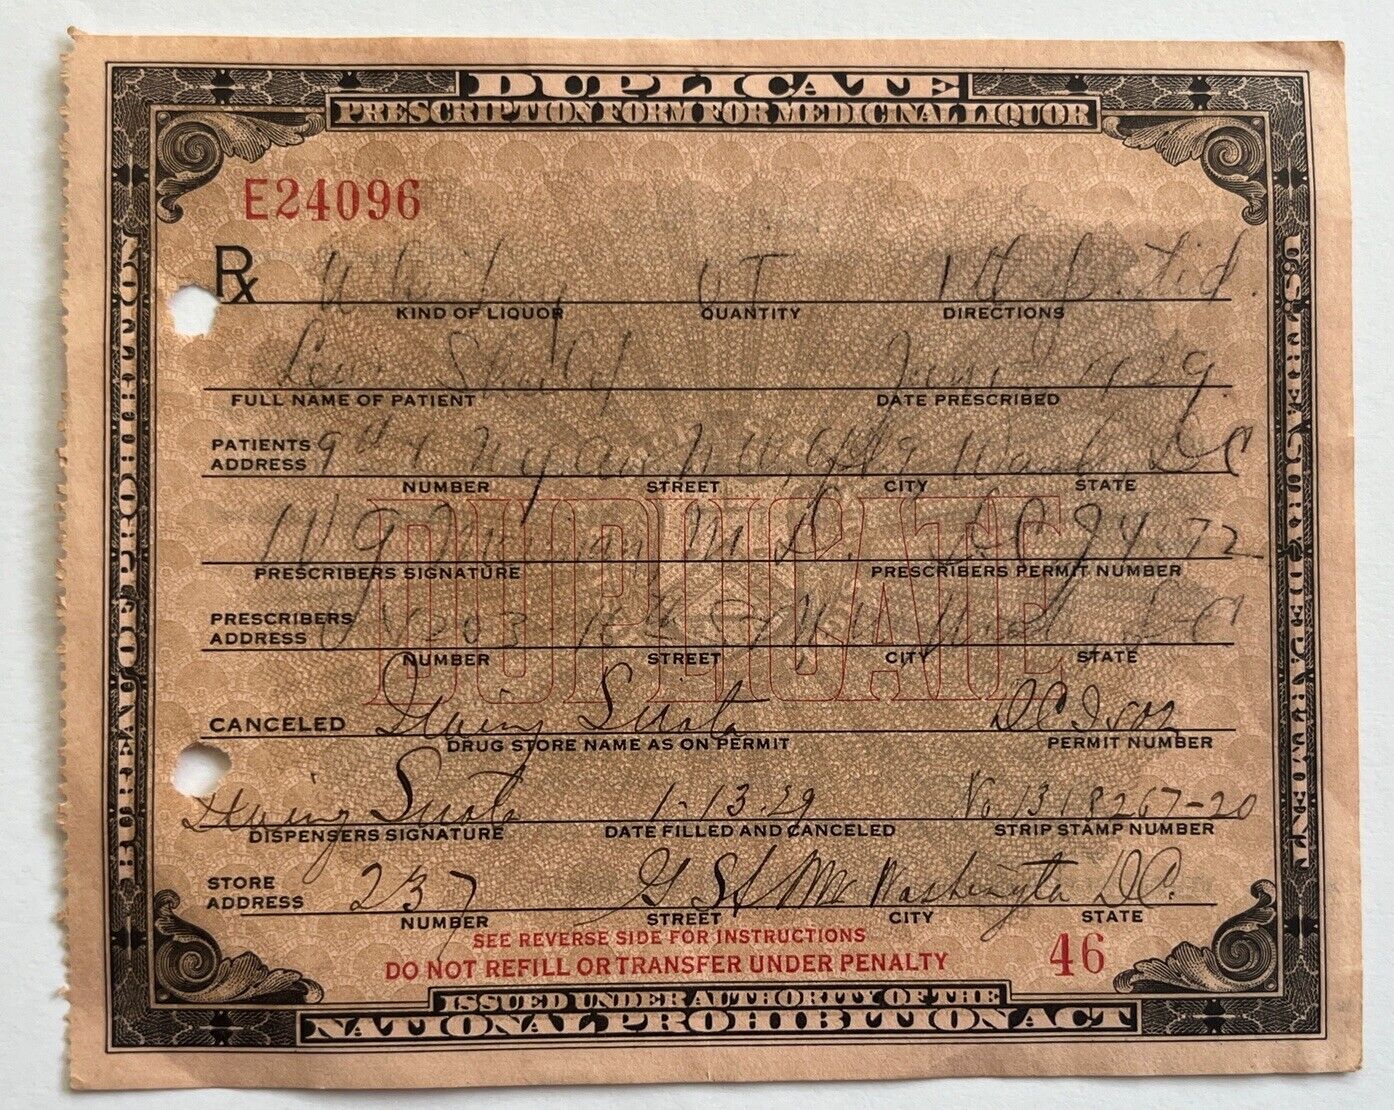 Prescription Form - 1929 - National Prohibition Act - “Whiskey” - Washington DC